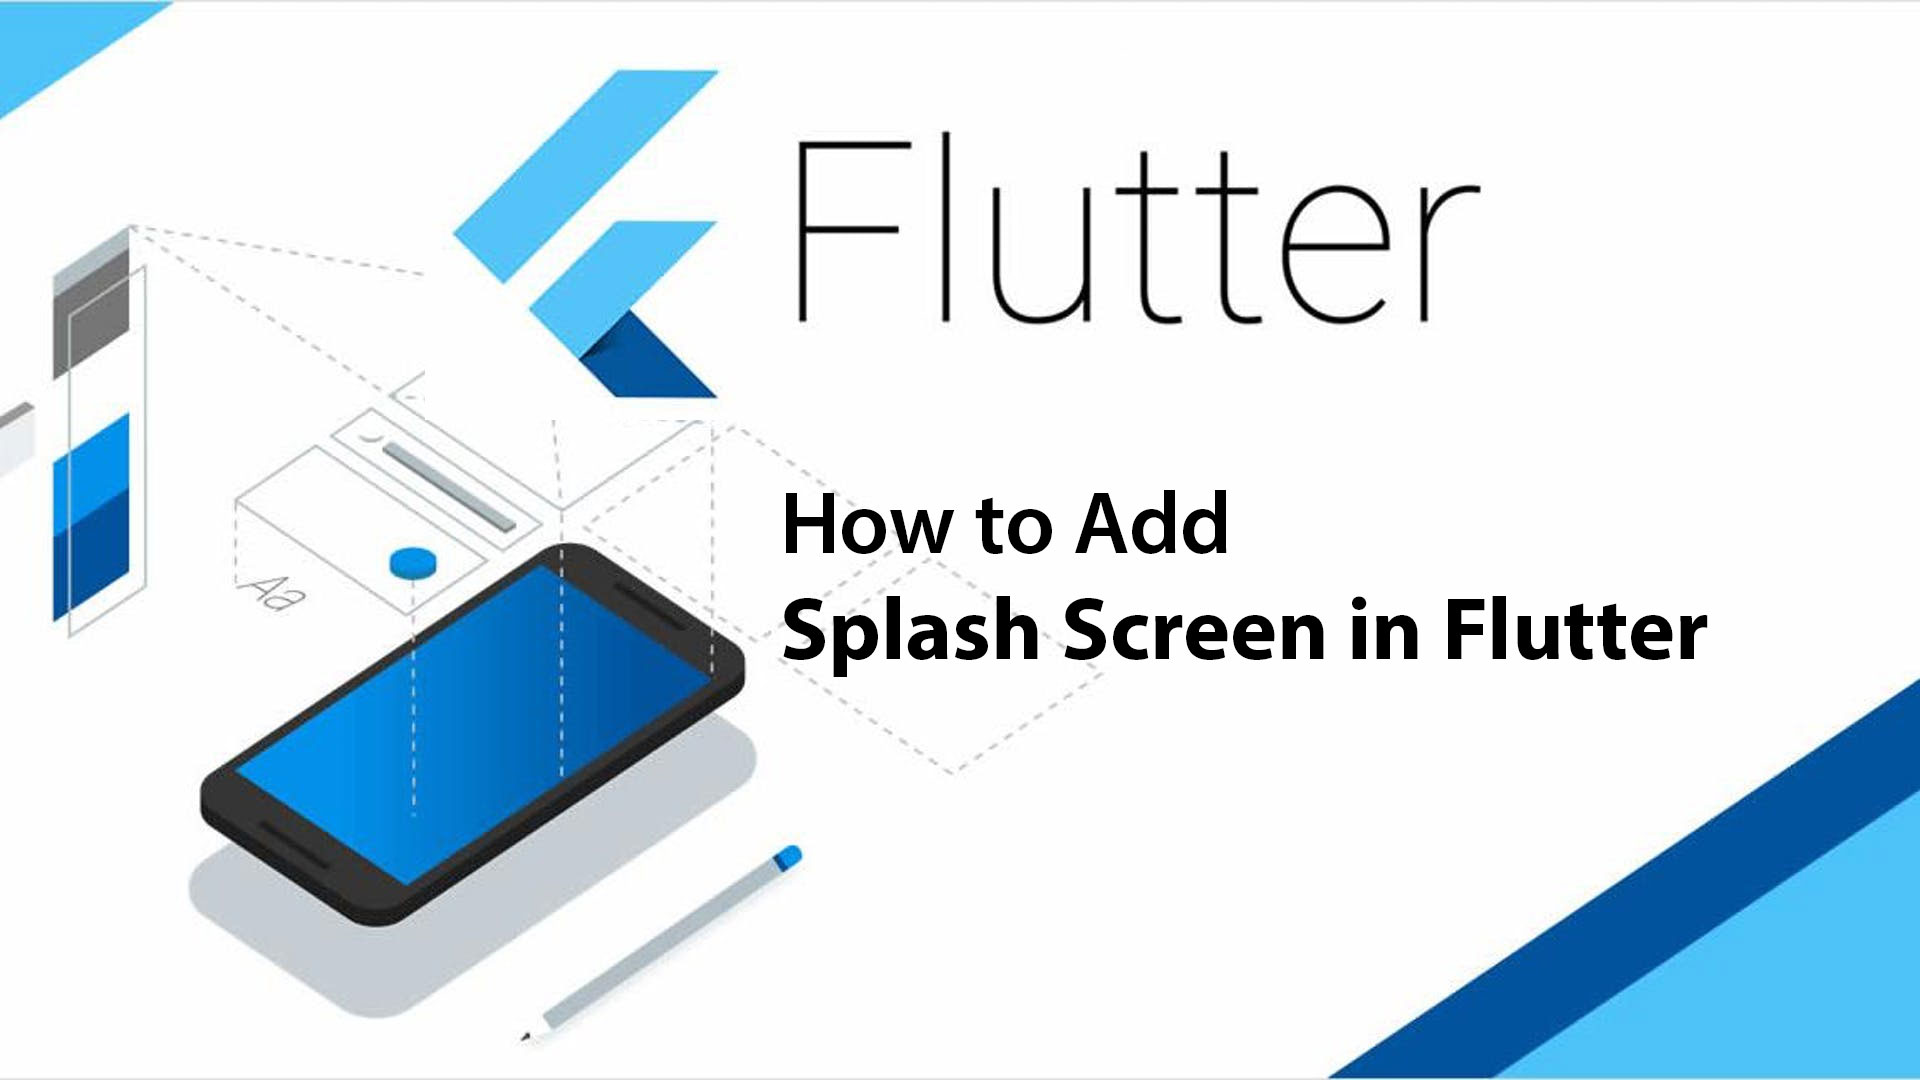 How to Add Splash Screen in Flutter